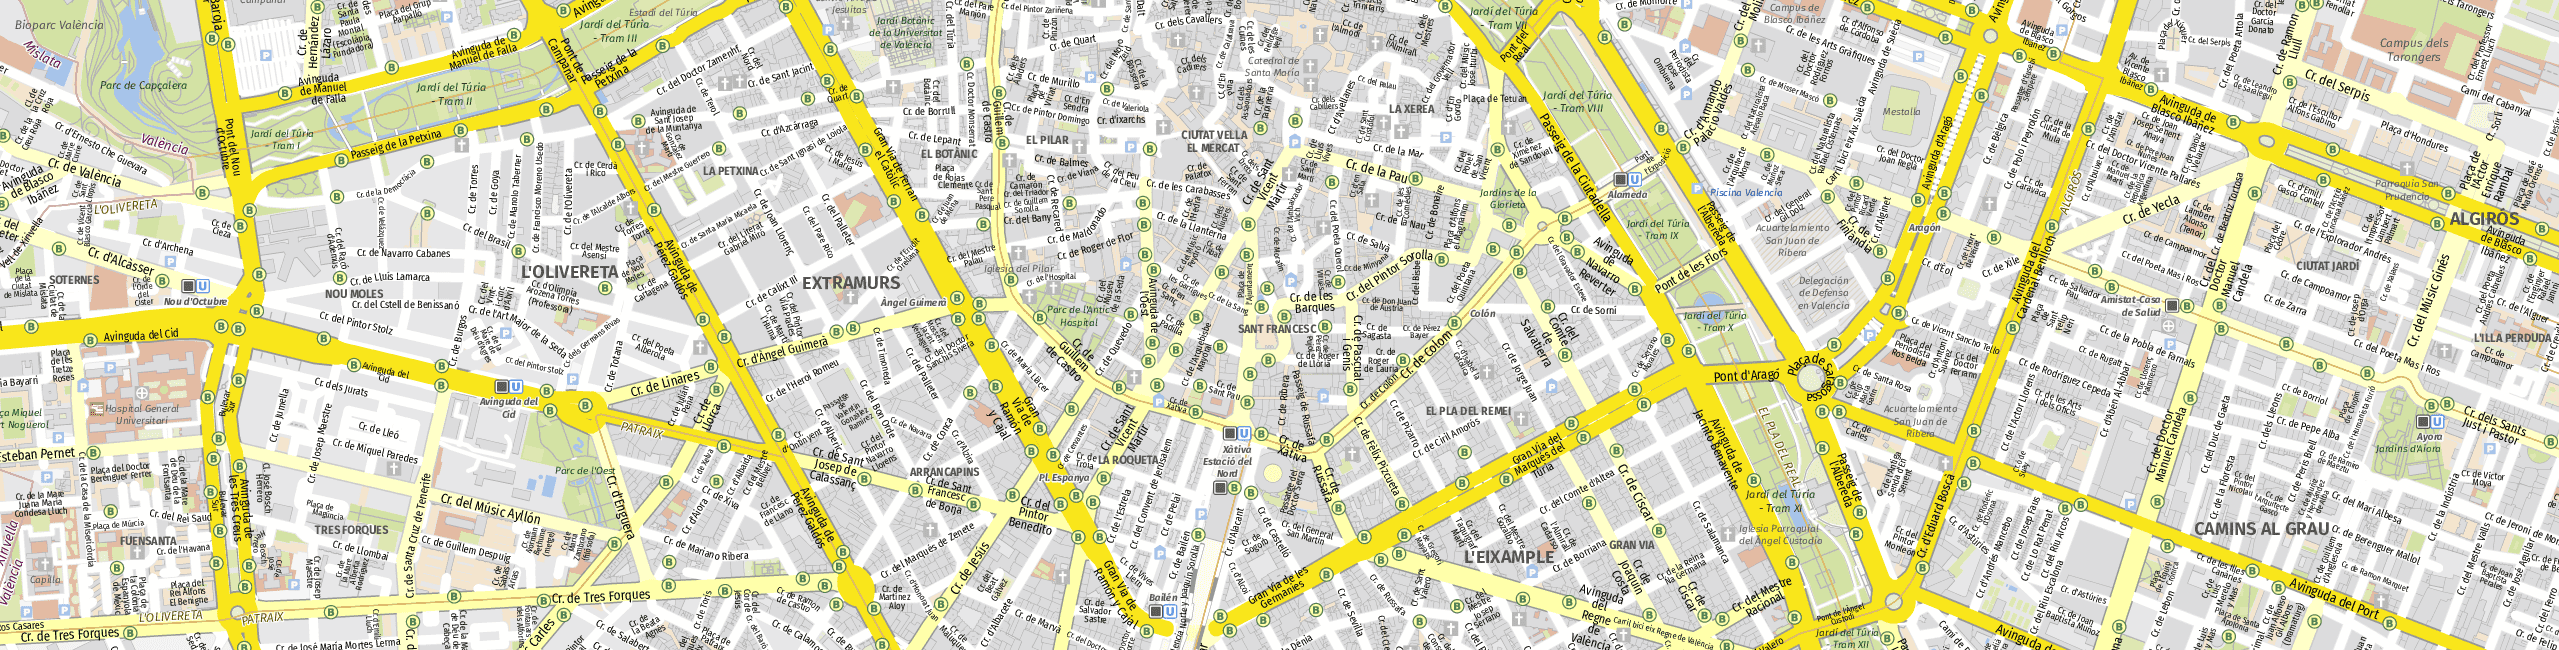 Stadtplan Valencia zum Downloaden.